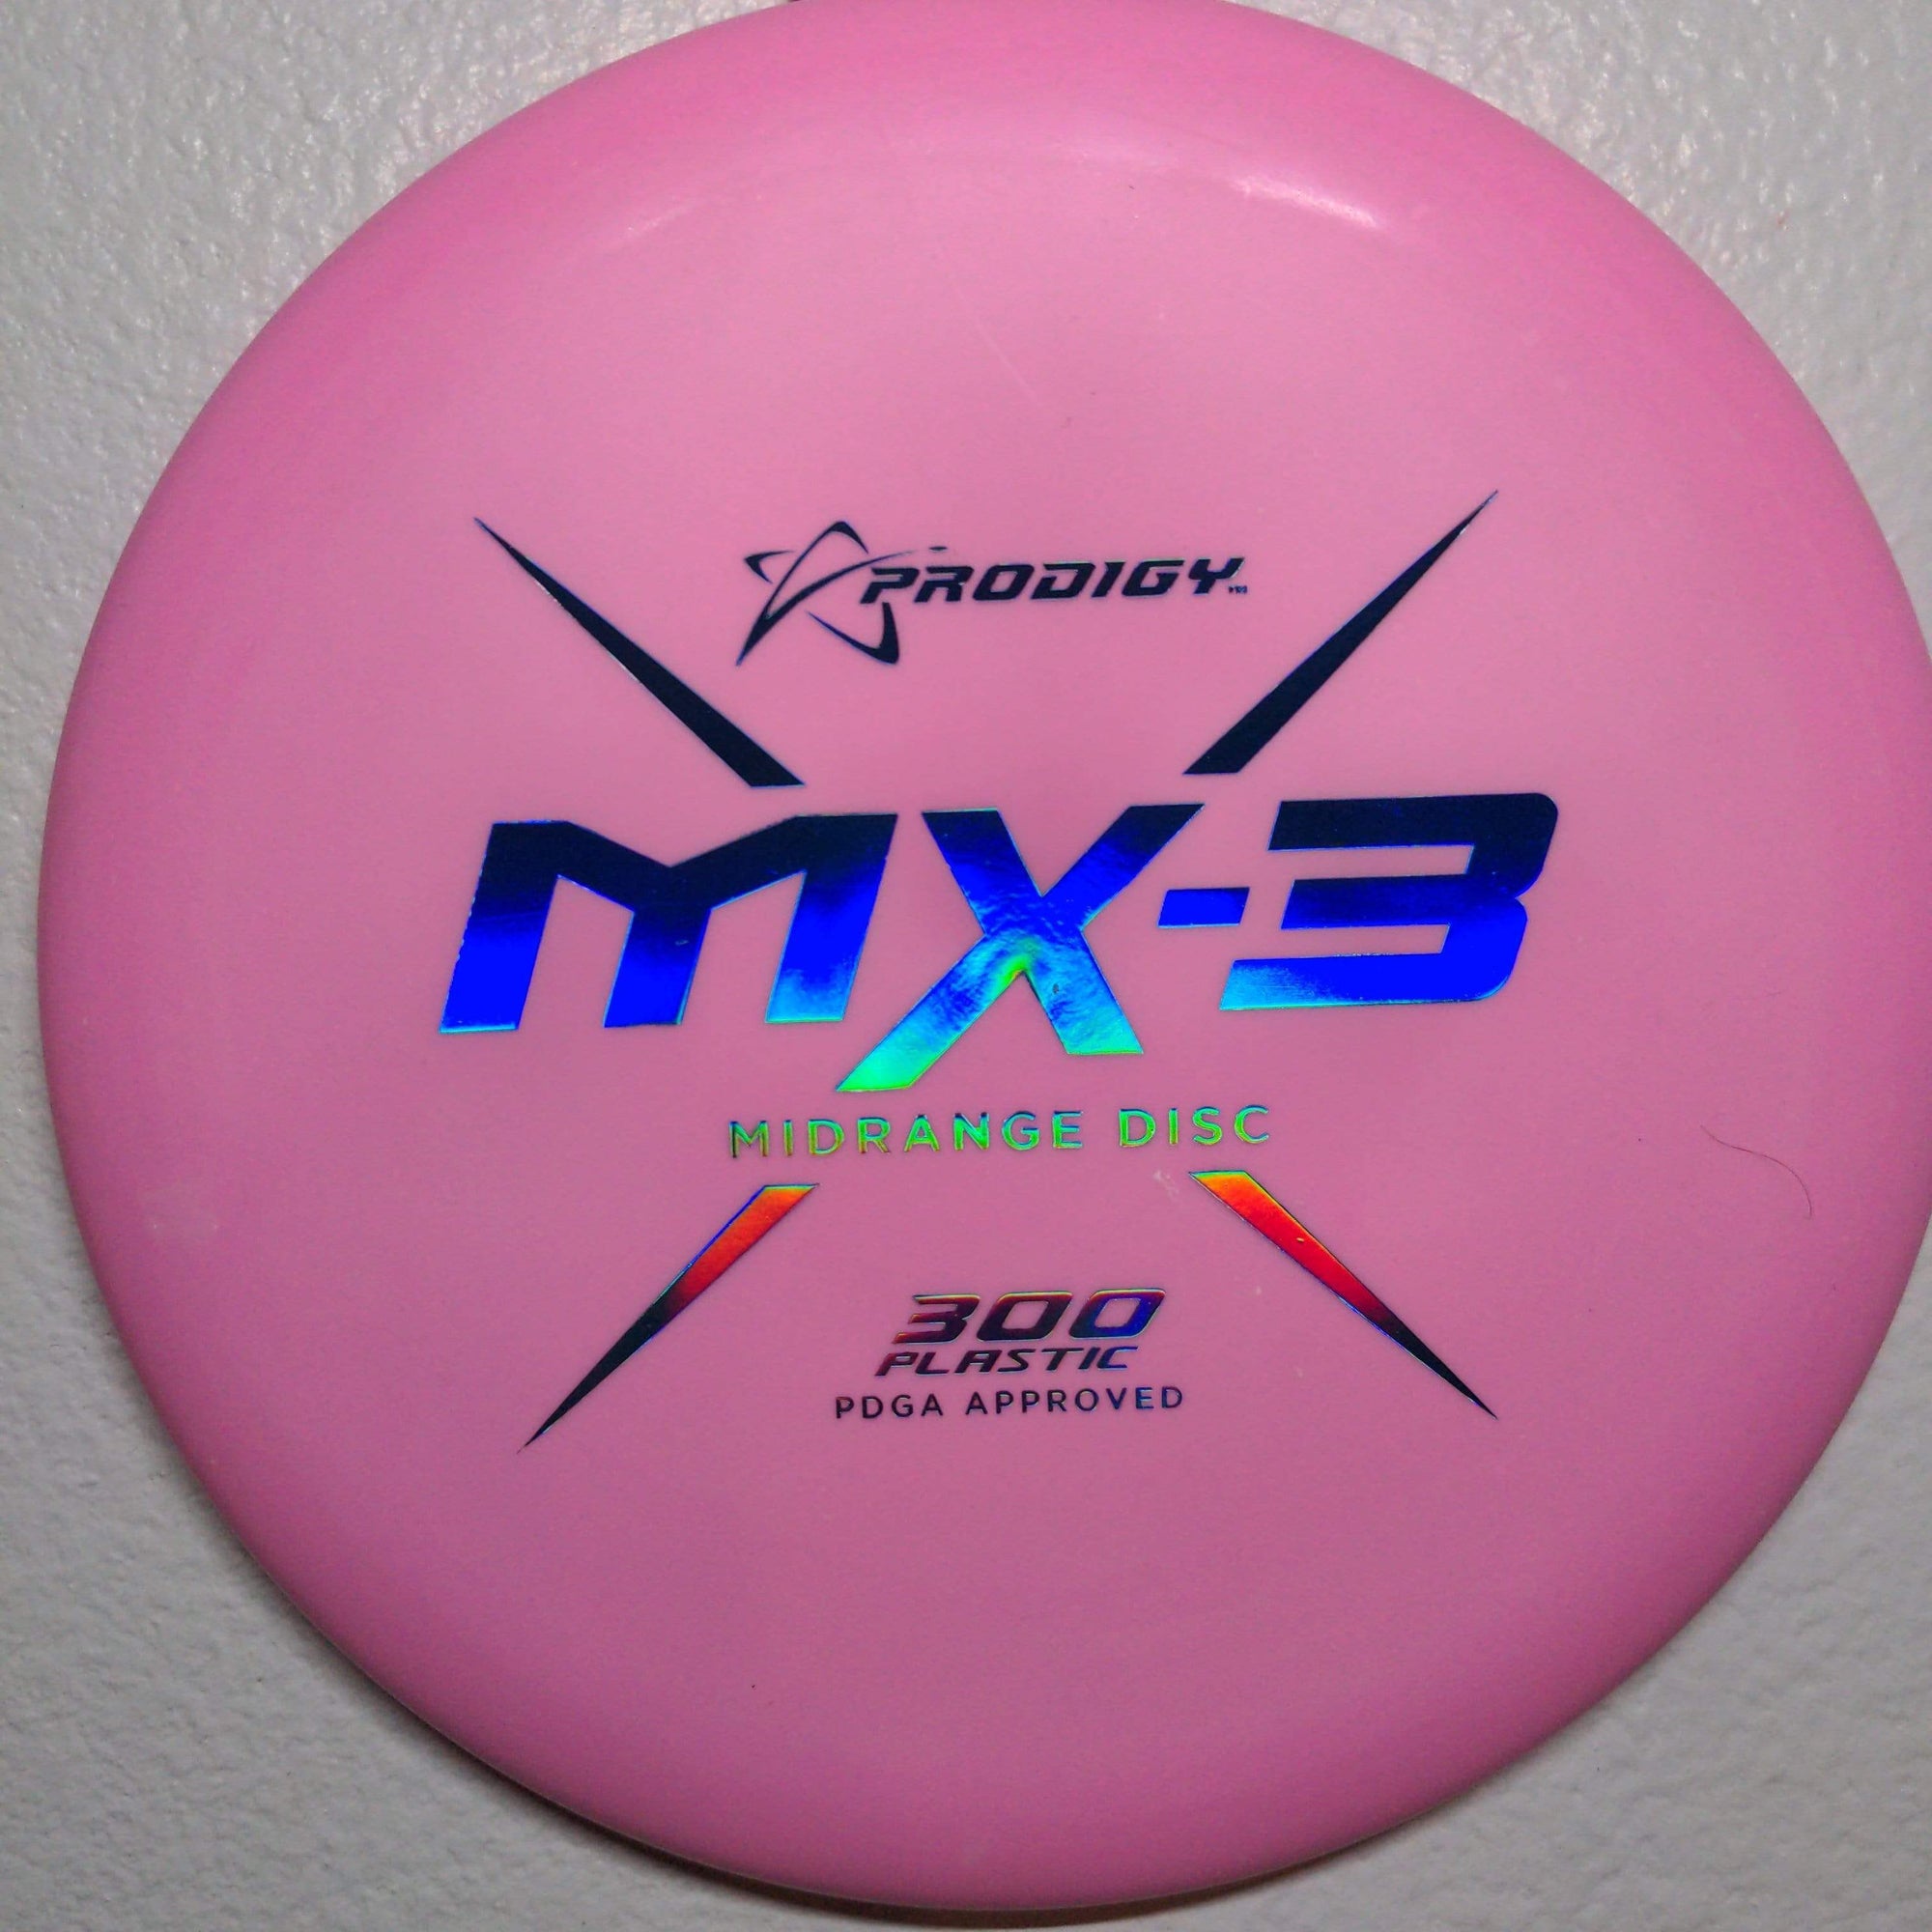 Prodigy Mid Range Pink 179g MX-3, 300 Plastic